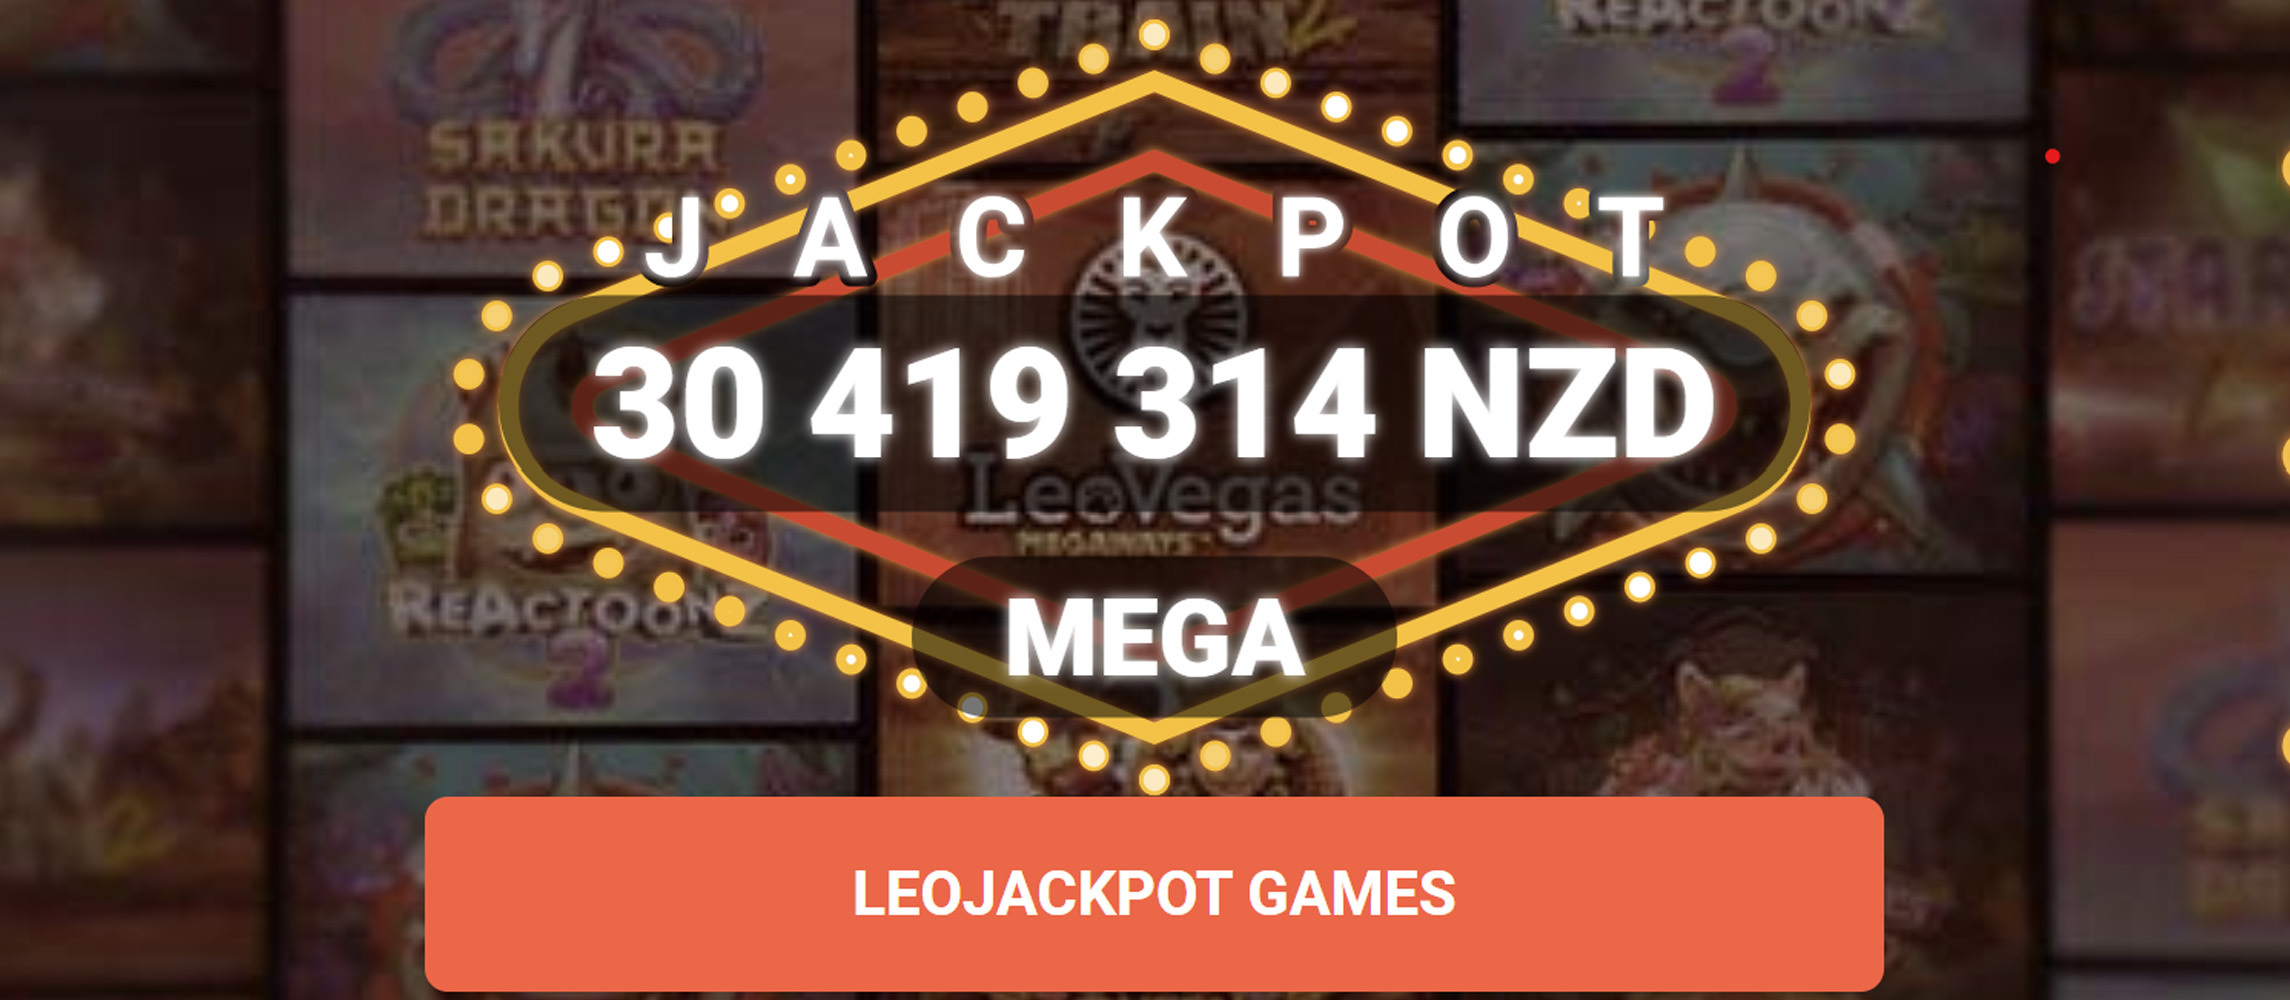 The LeoJackpot